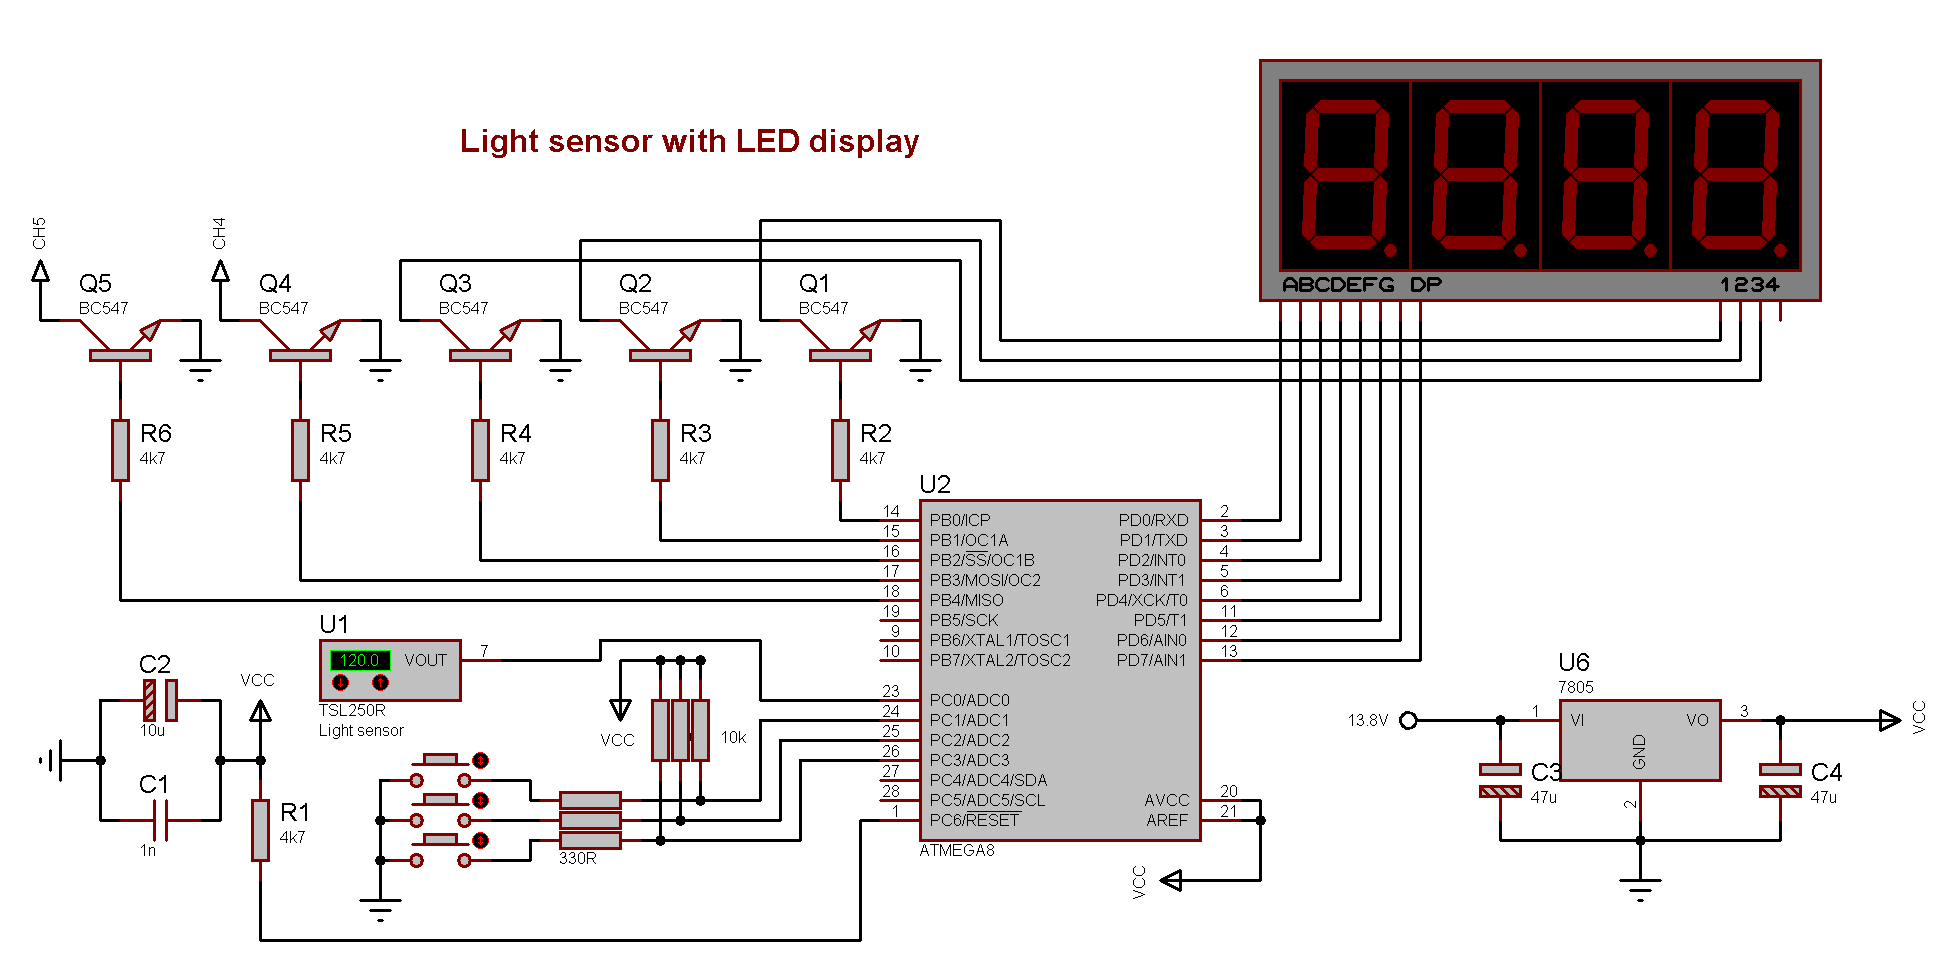 Light sensor schematics